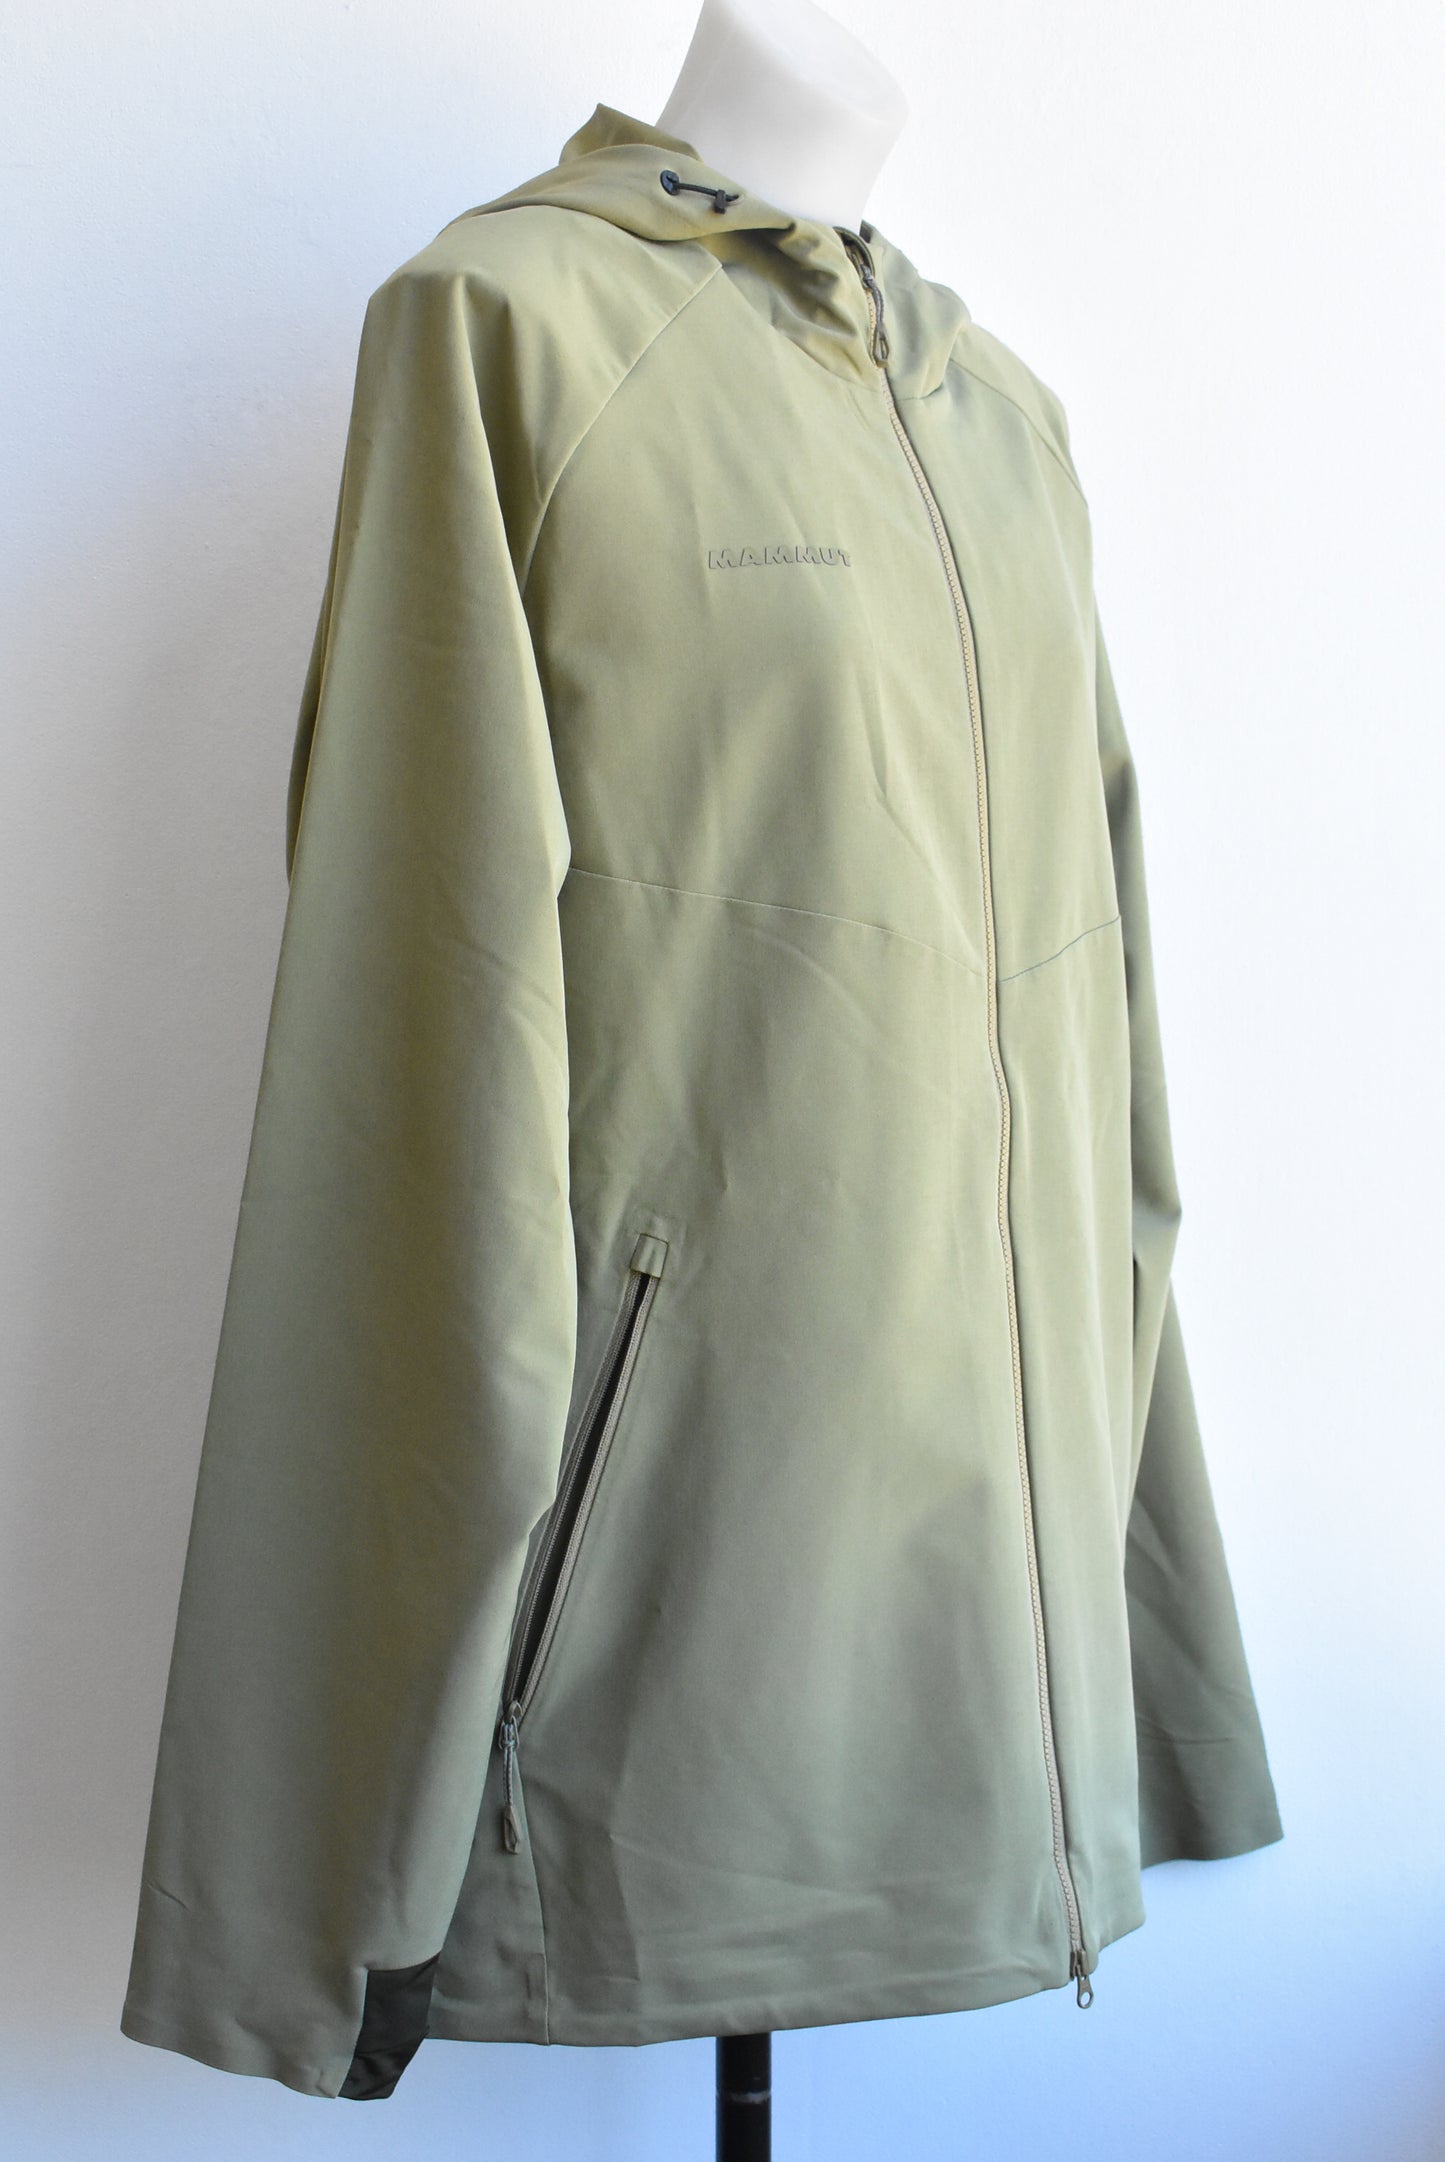 Mammut green hooded jacket, size XL